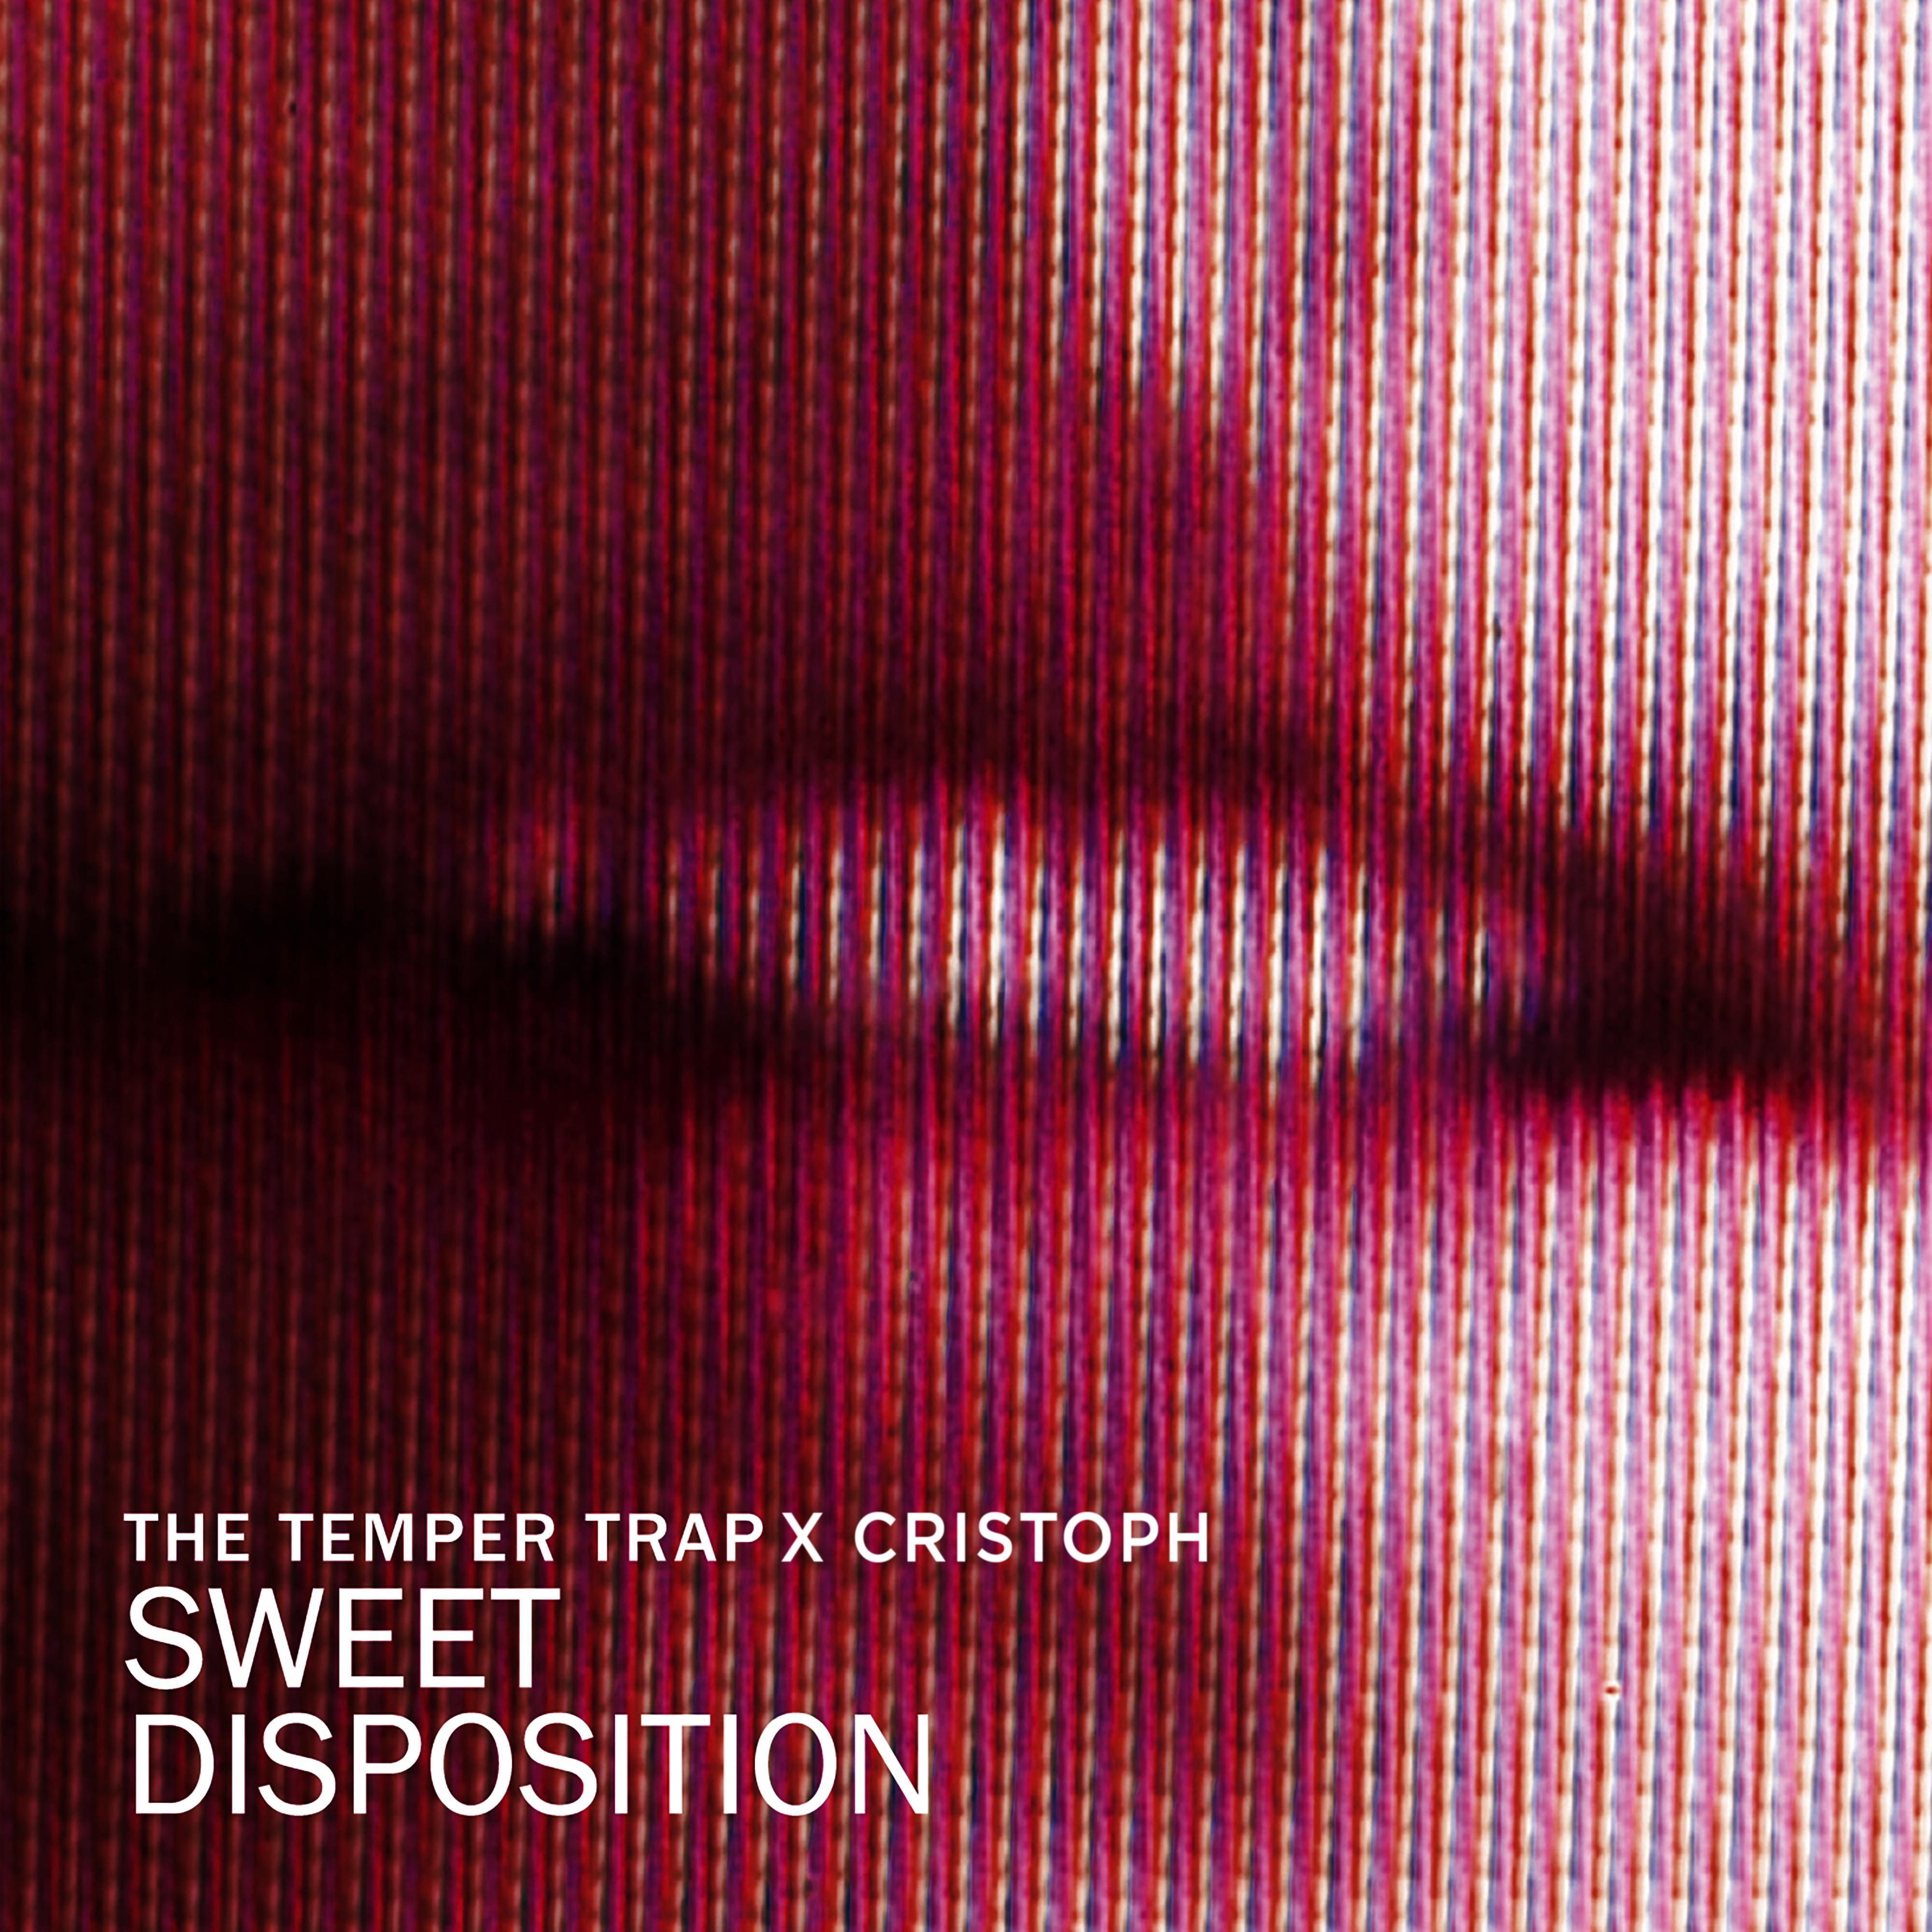 The Temper Trap - Sweet Disposition (Cristoph Remix Edit)